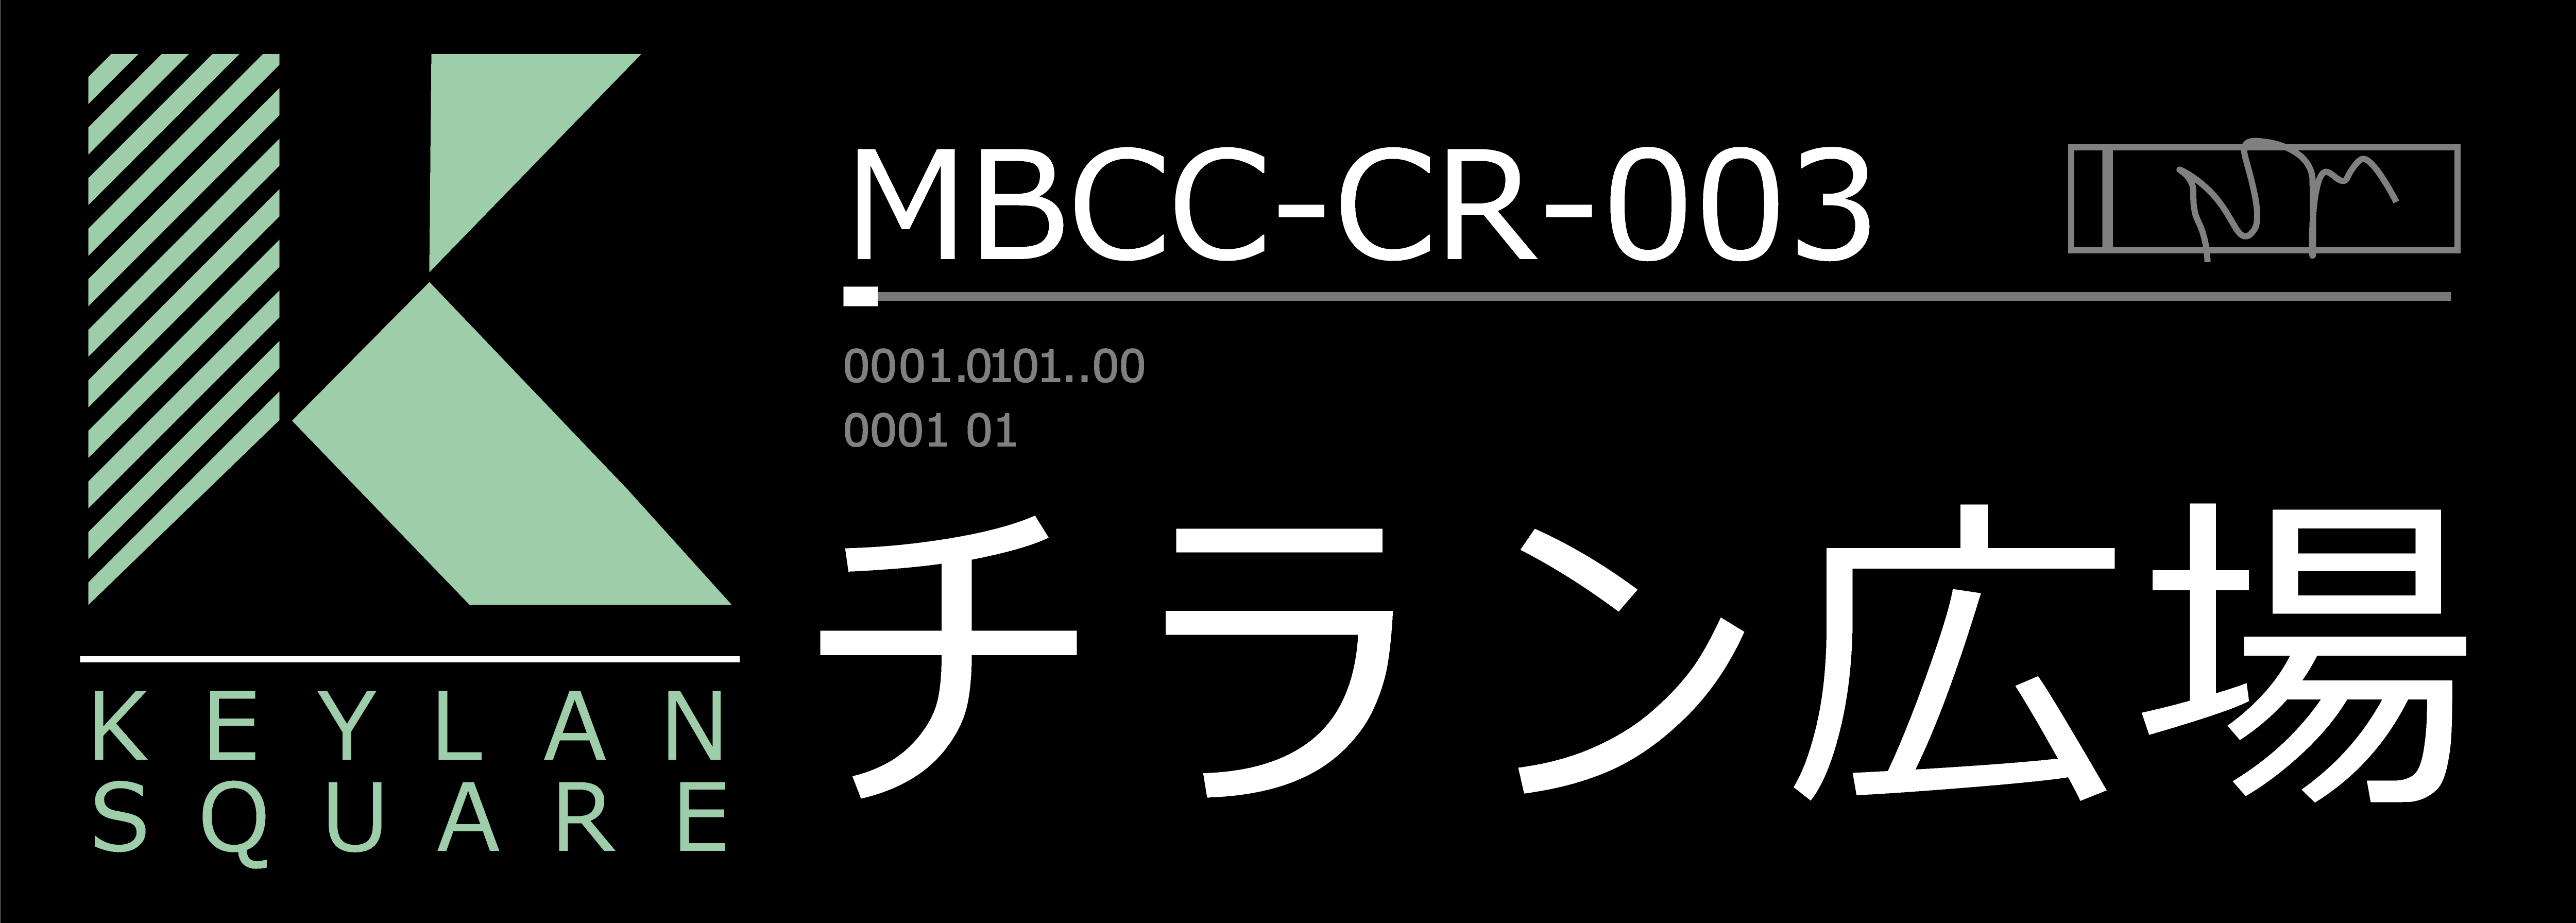 MBCC-CR-003.png